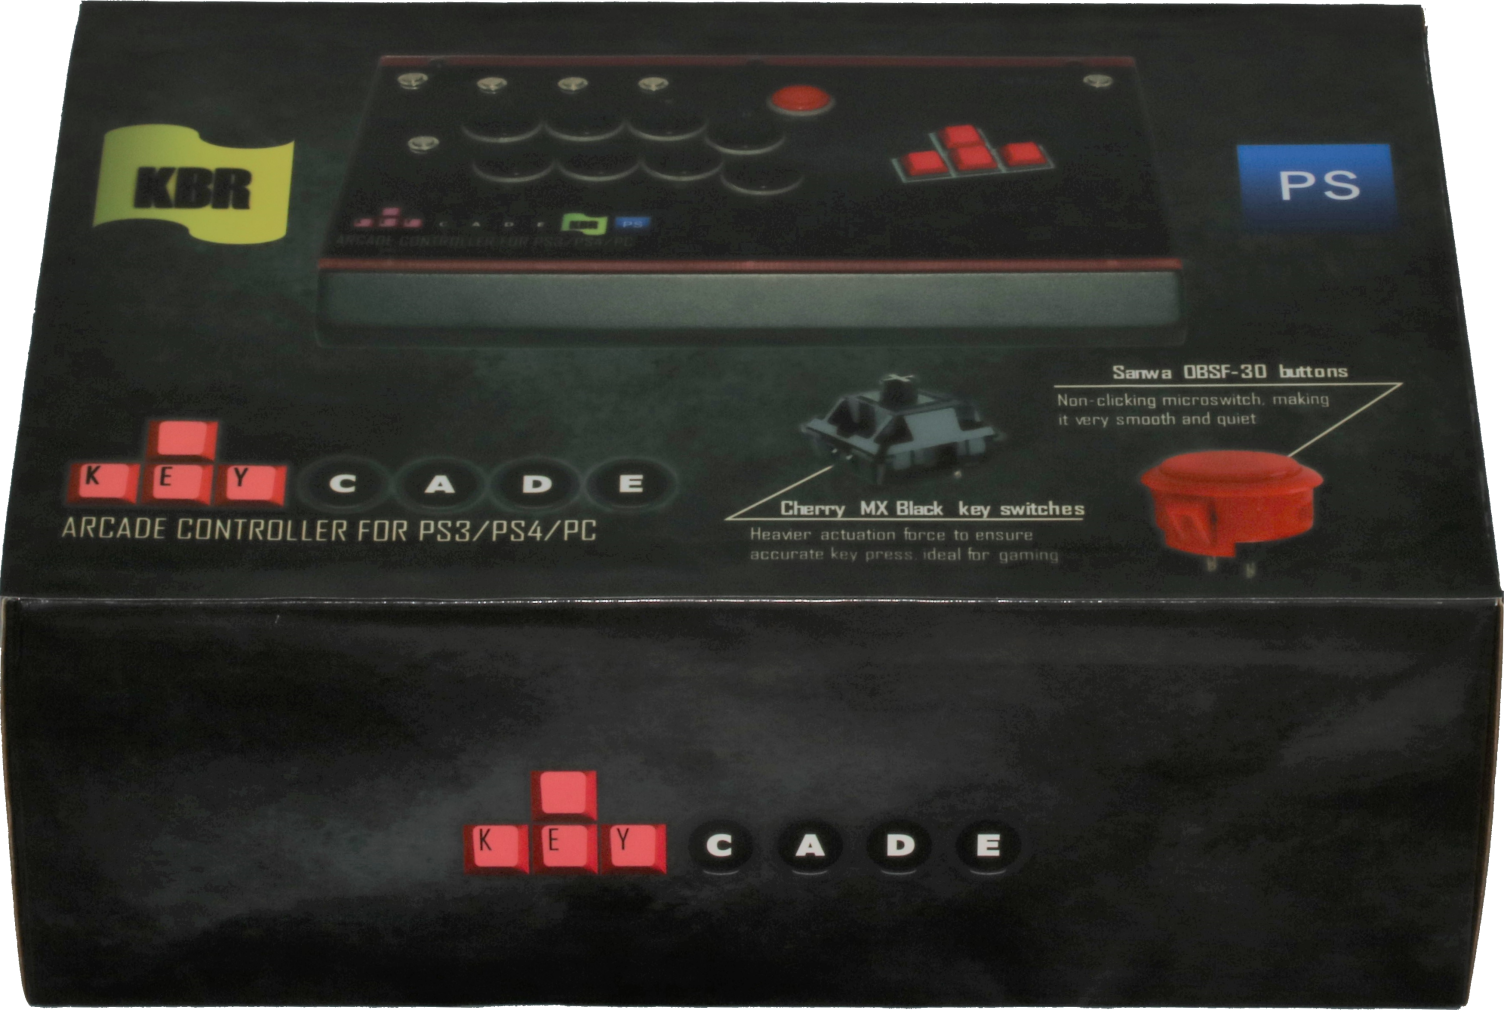 KeyCade KBR PS5 arcade controller